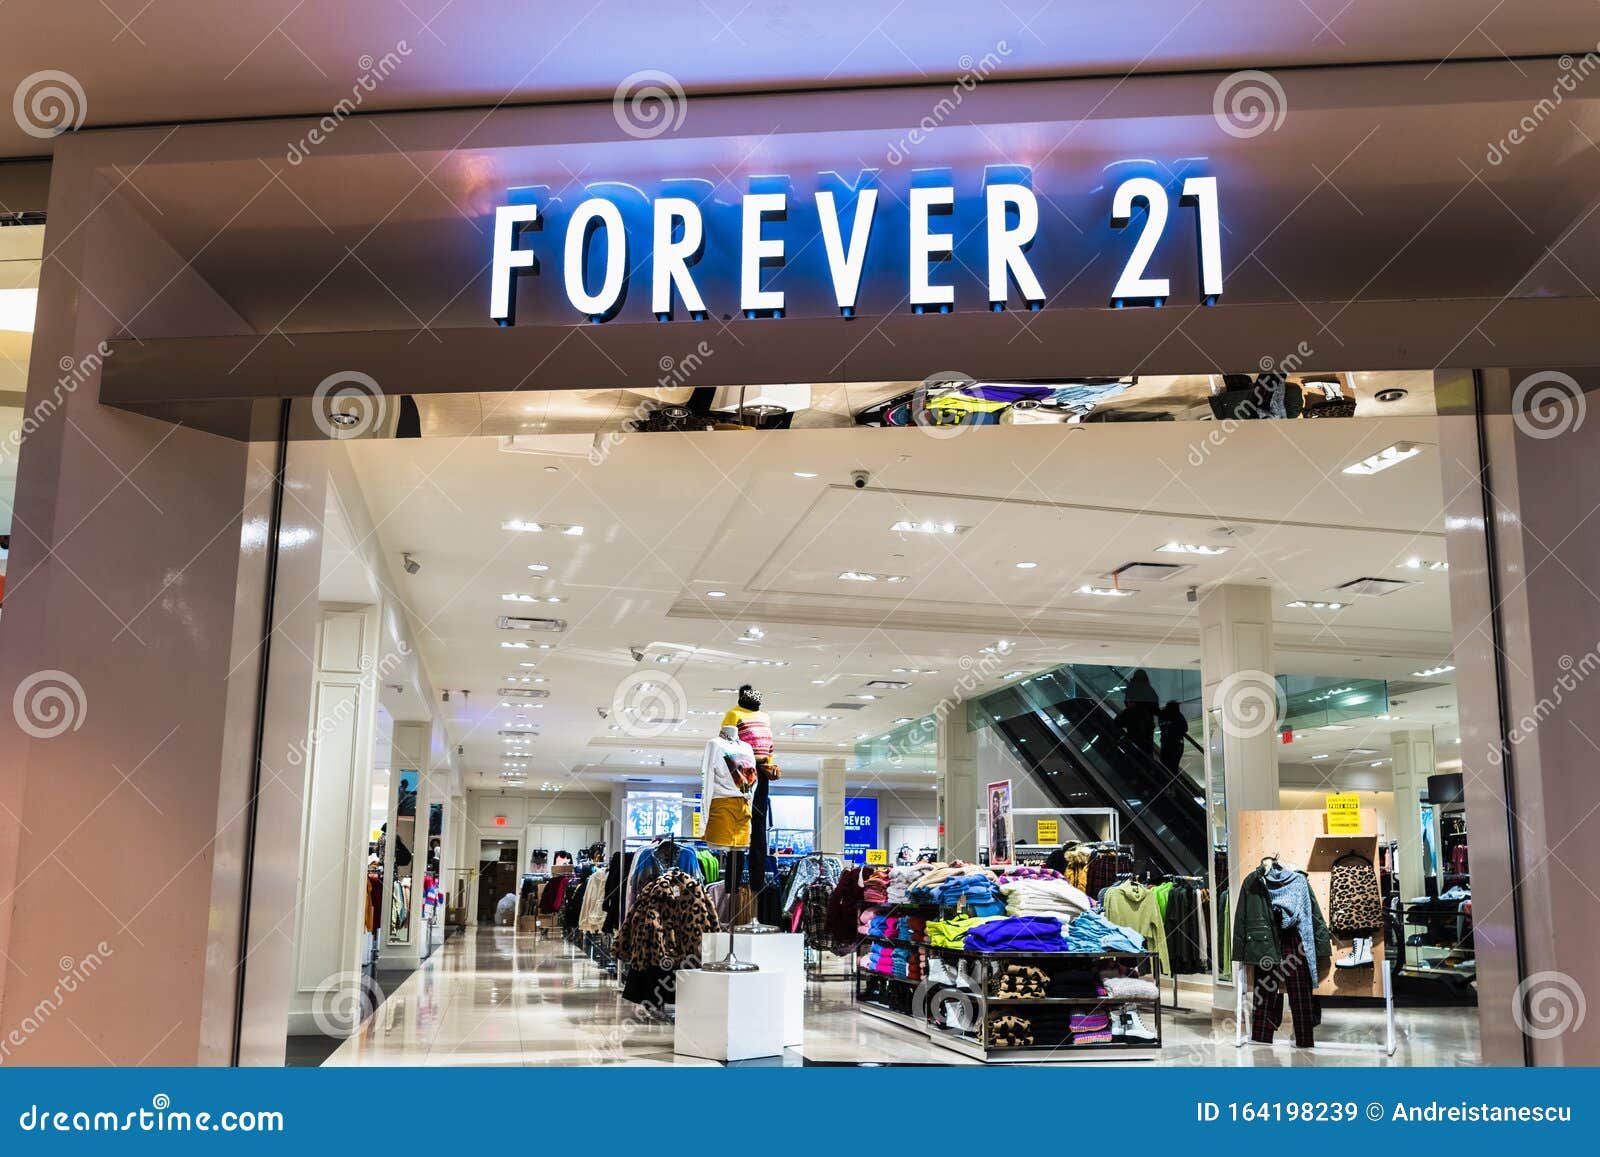 Nov 15, 2019 Pleasanton / CA / USA - Forever 21 Store Located in East ...